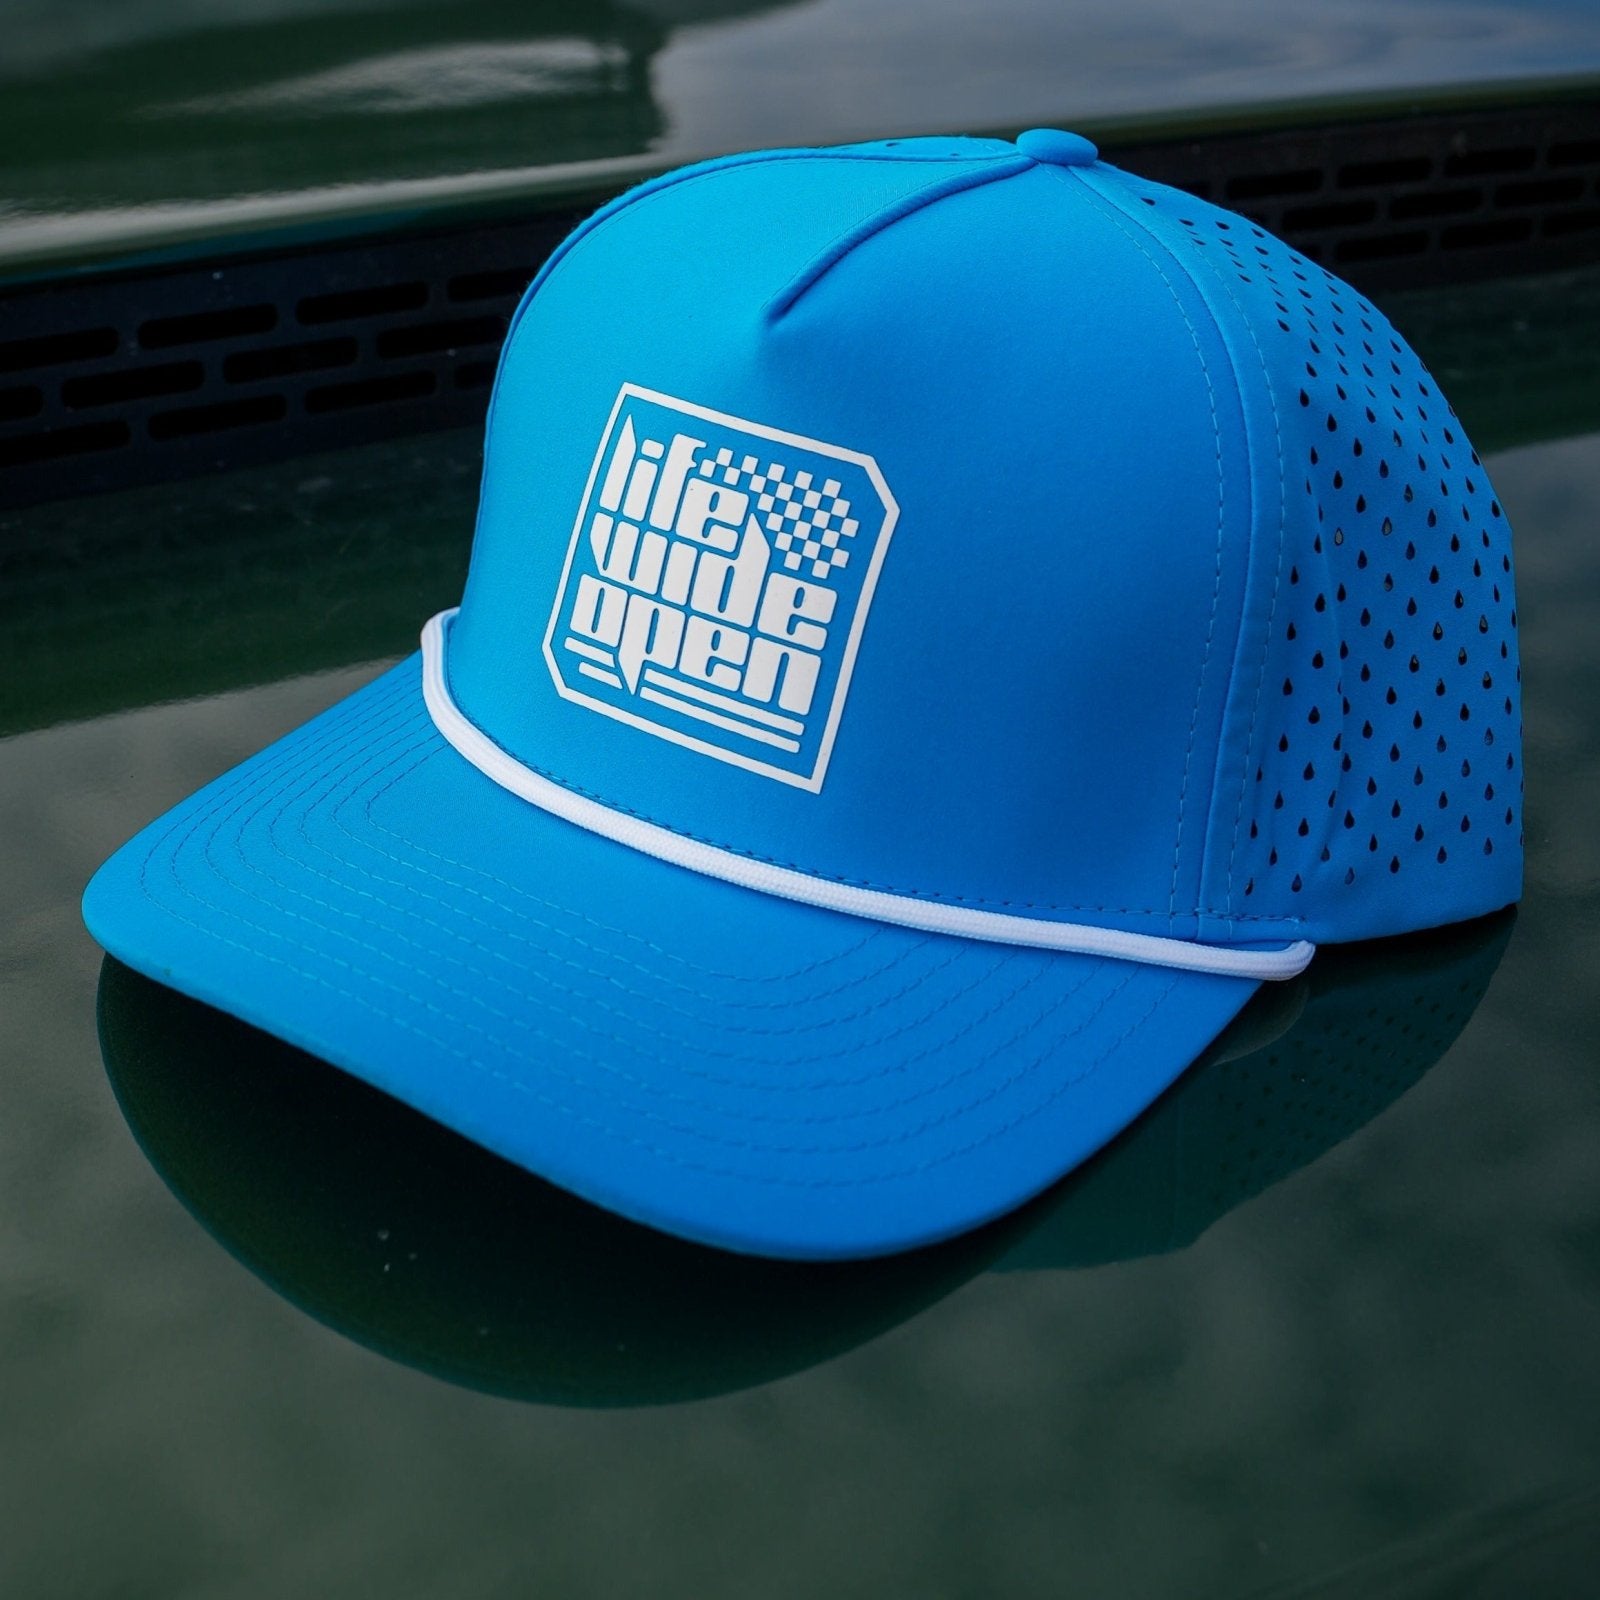 Blue Baja Performance Hat